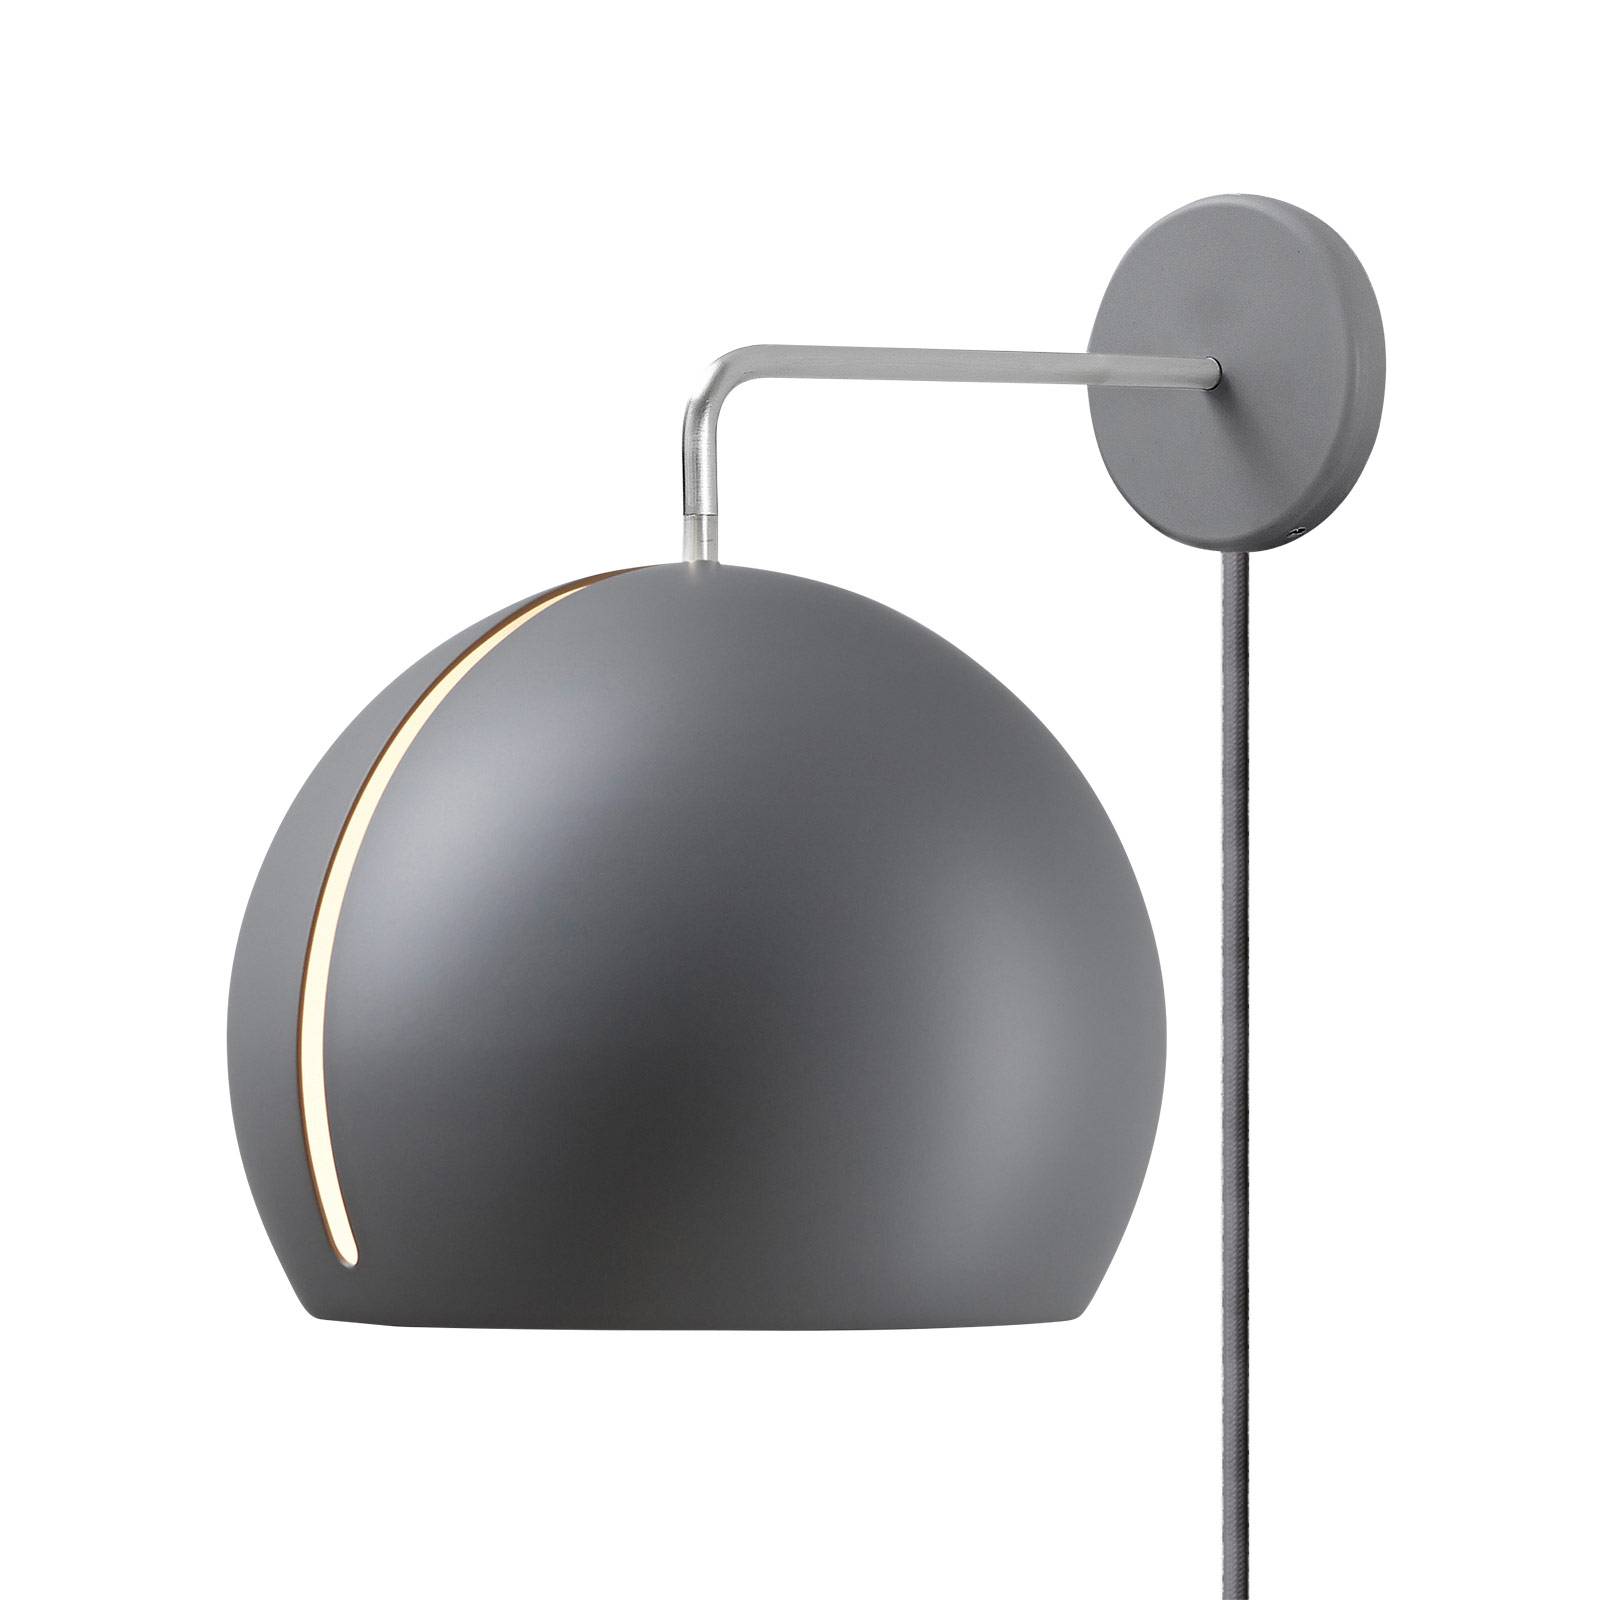 Nyta Tilt Globe Wall Wandlampe mit Stecker grau günstig online kaufen